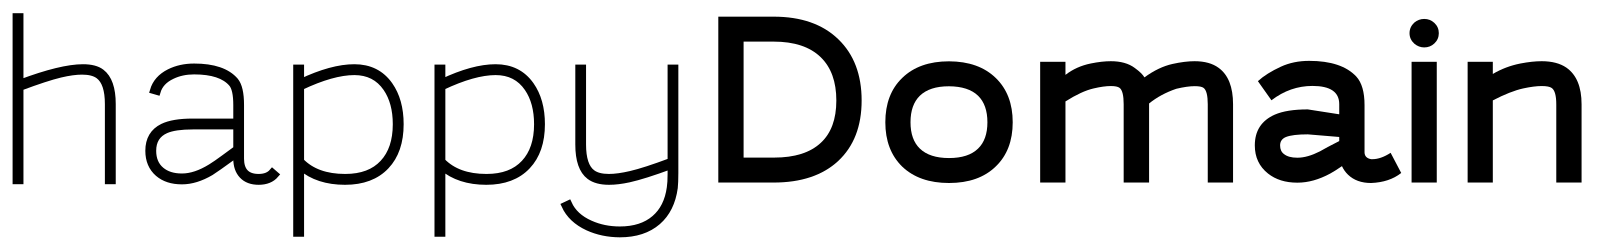 happyDomain logo black